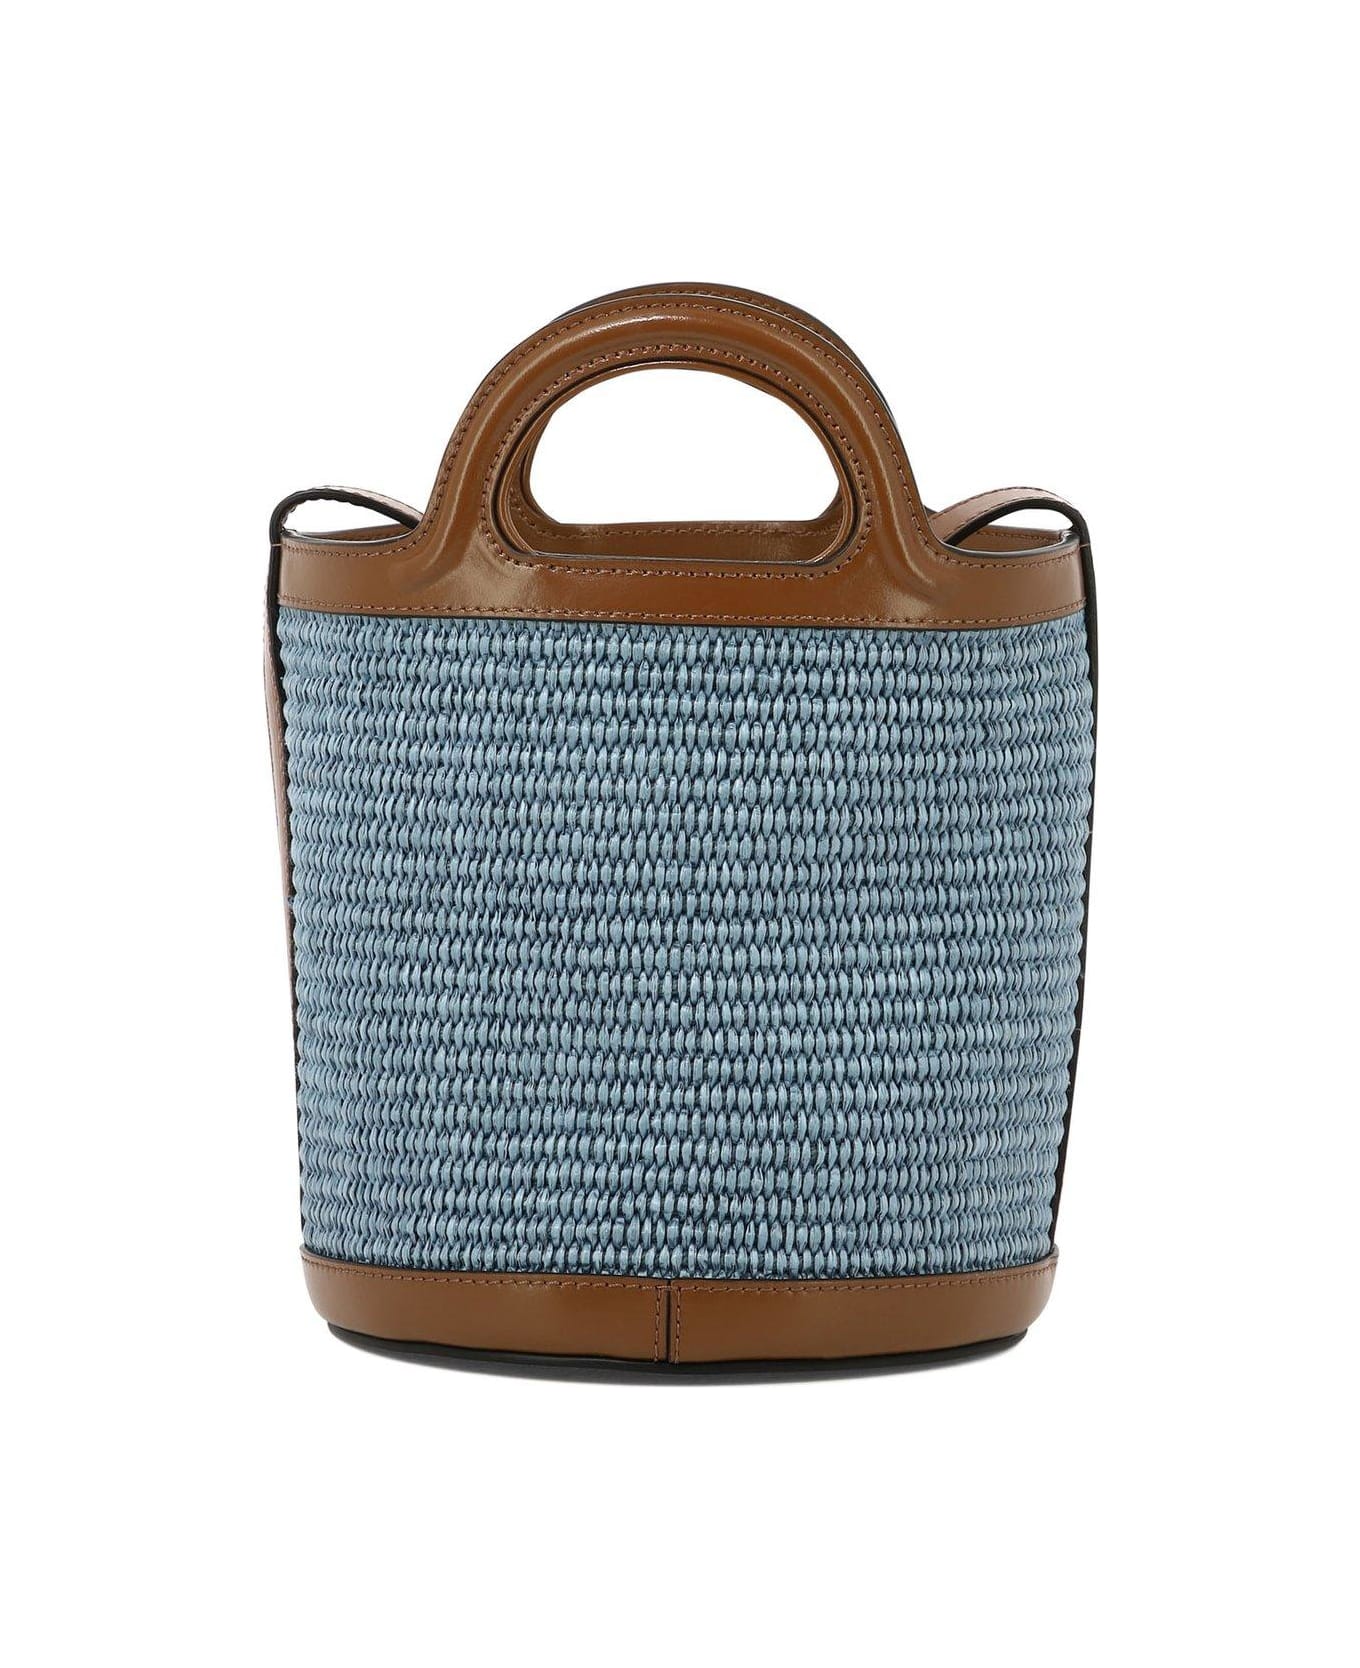 Marni Tropicalia Mini Bag In Brown Leather And Light Blue Raffia - Brown